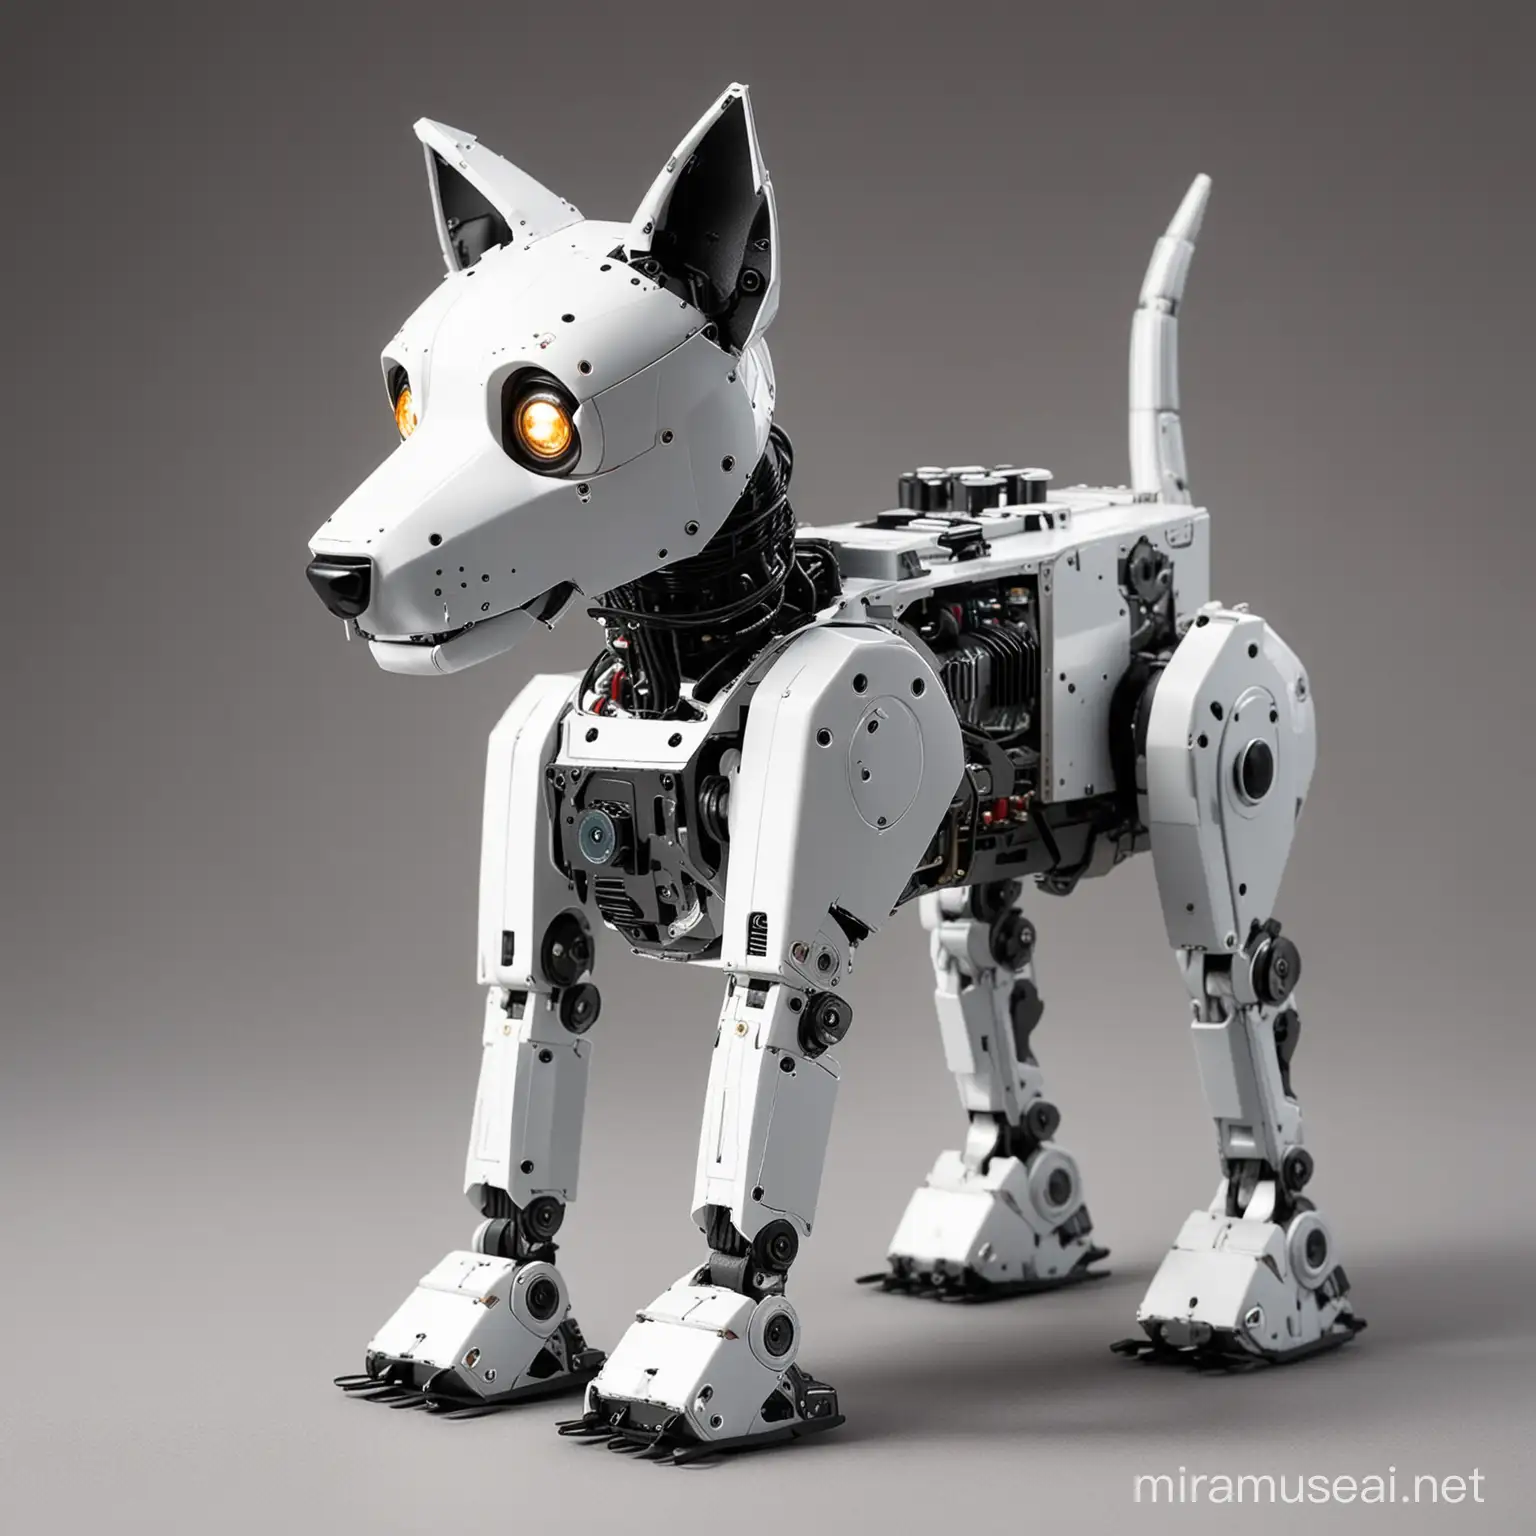 make a robot dog


